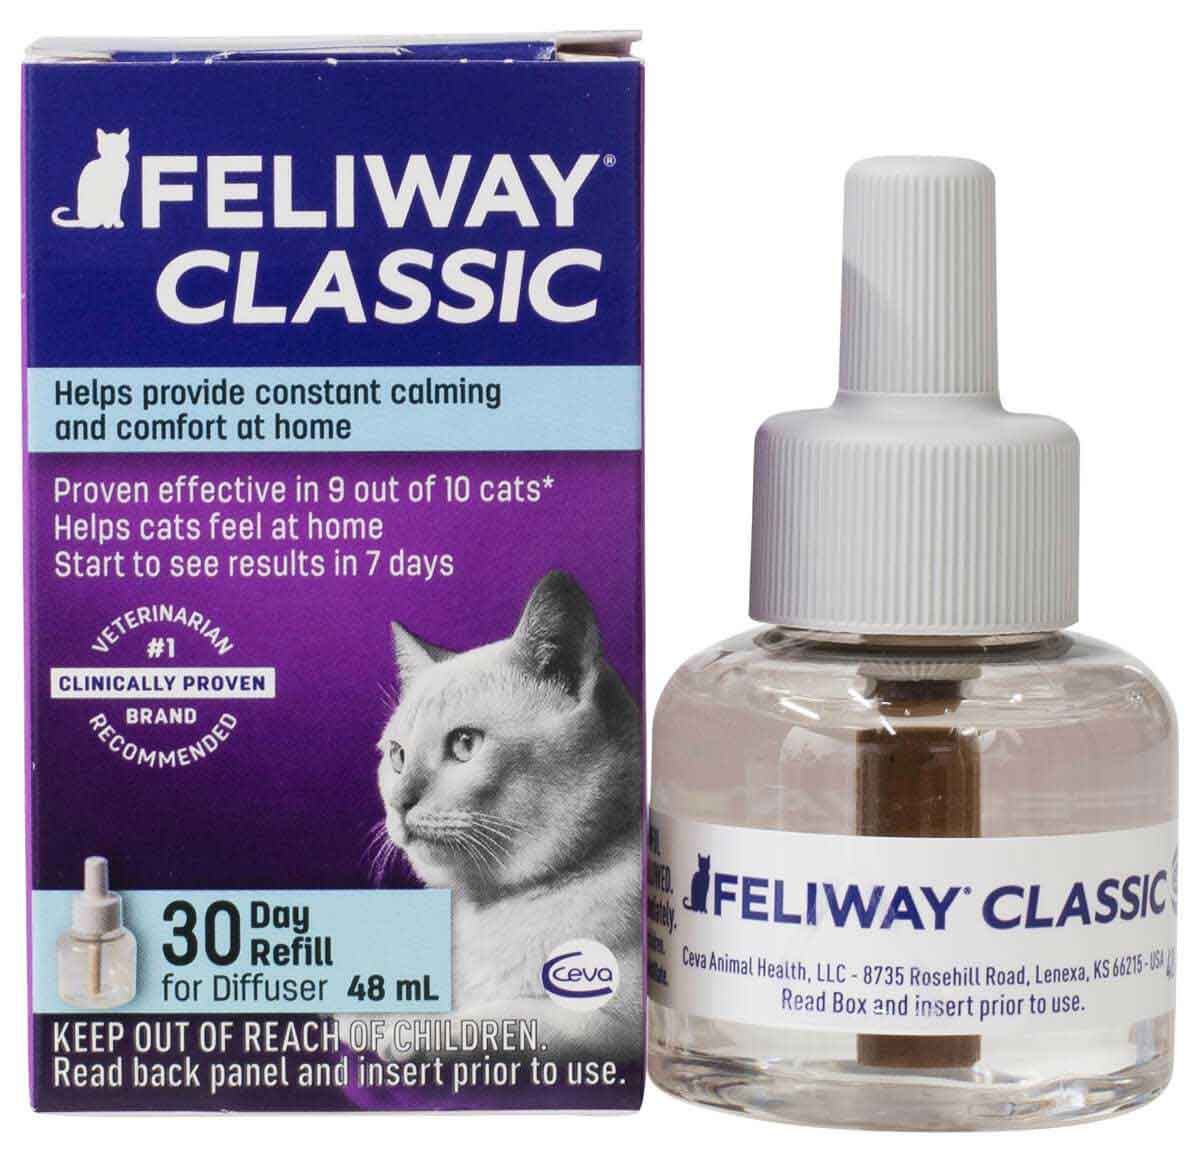 Feliway Classic Diffuser Refill Ceva Animal Health - Calming